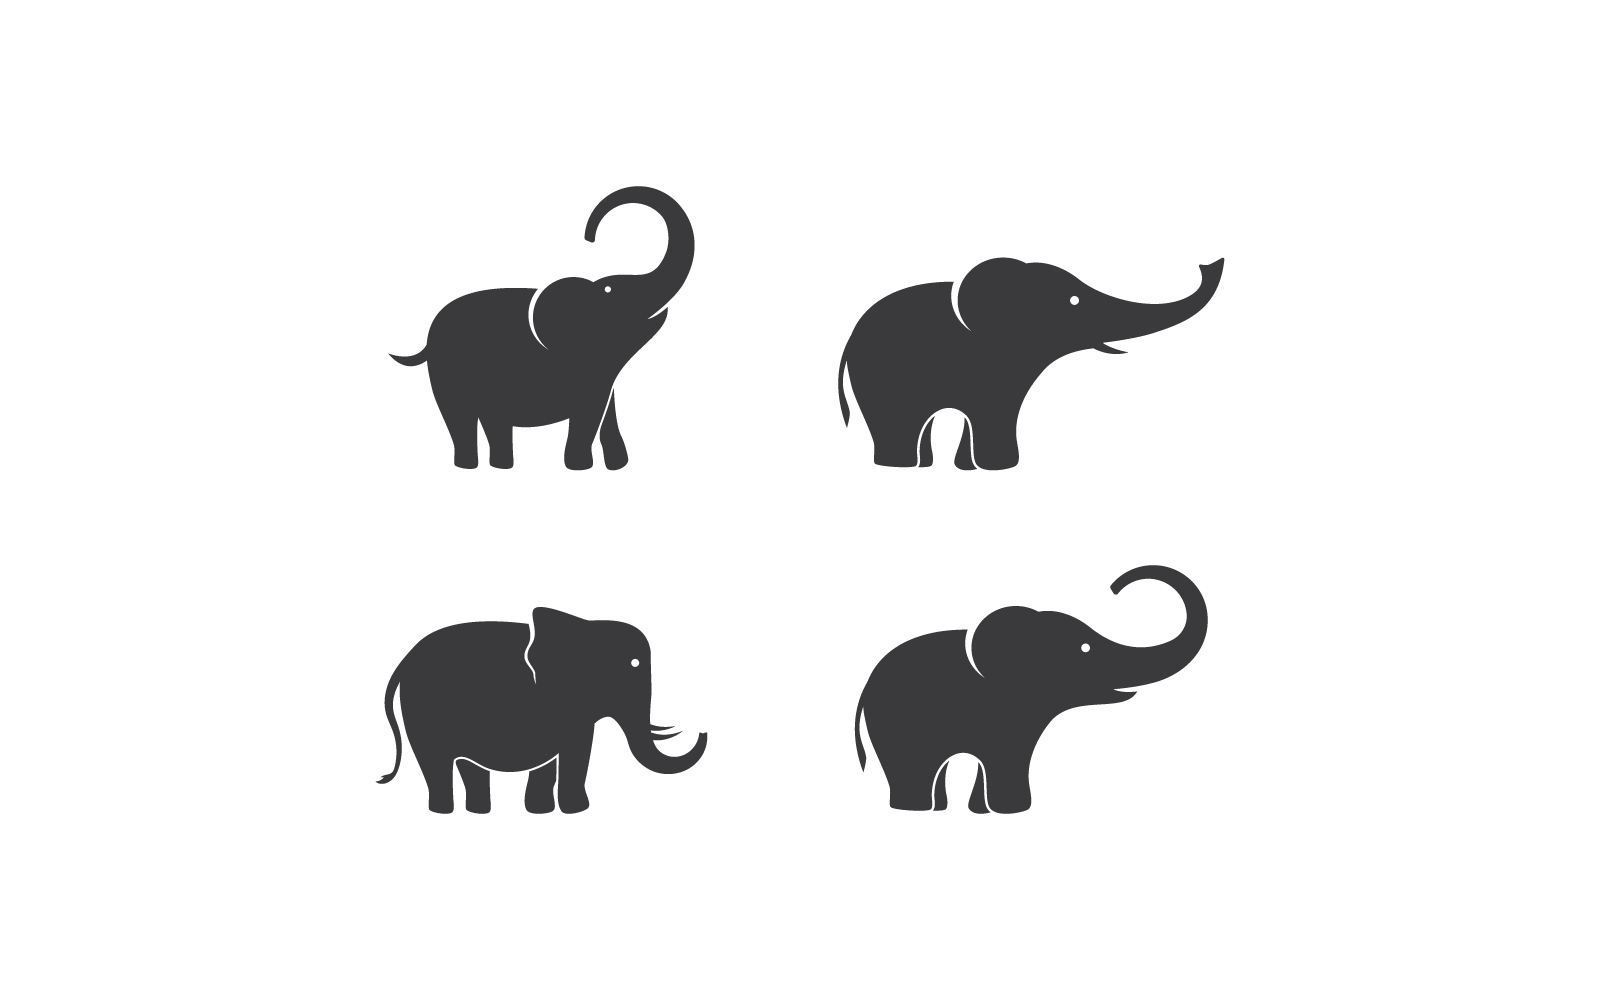 Elephant illustration vector flat design template